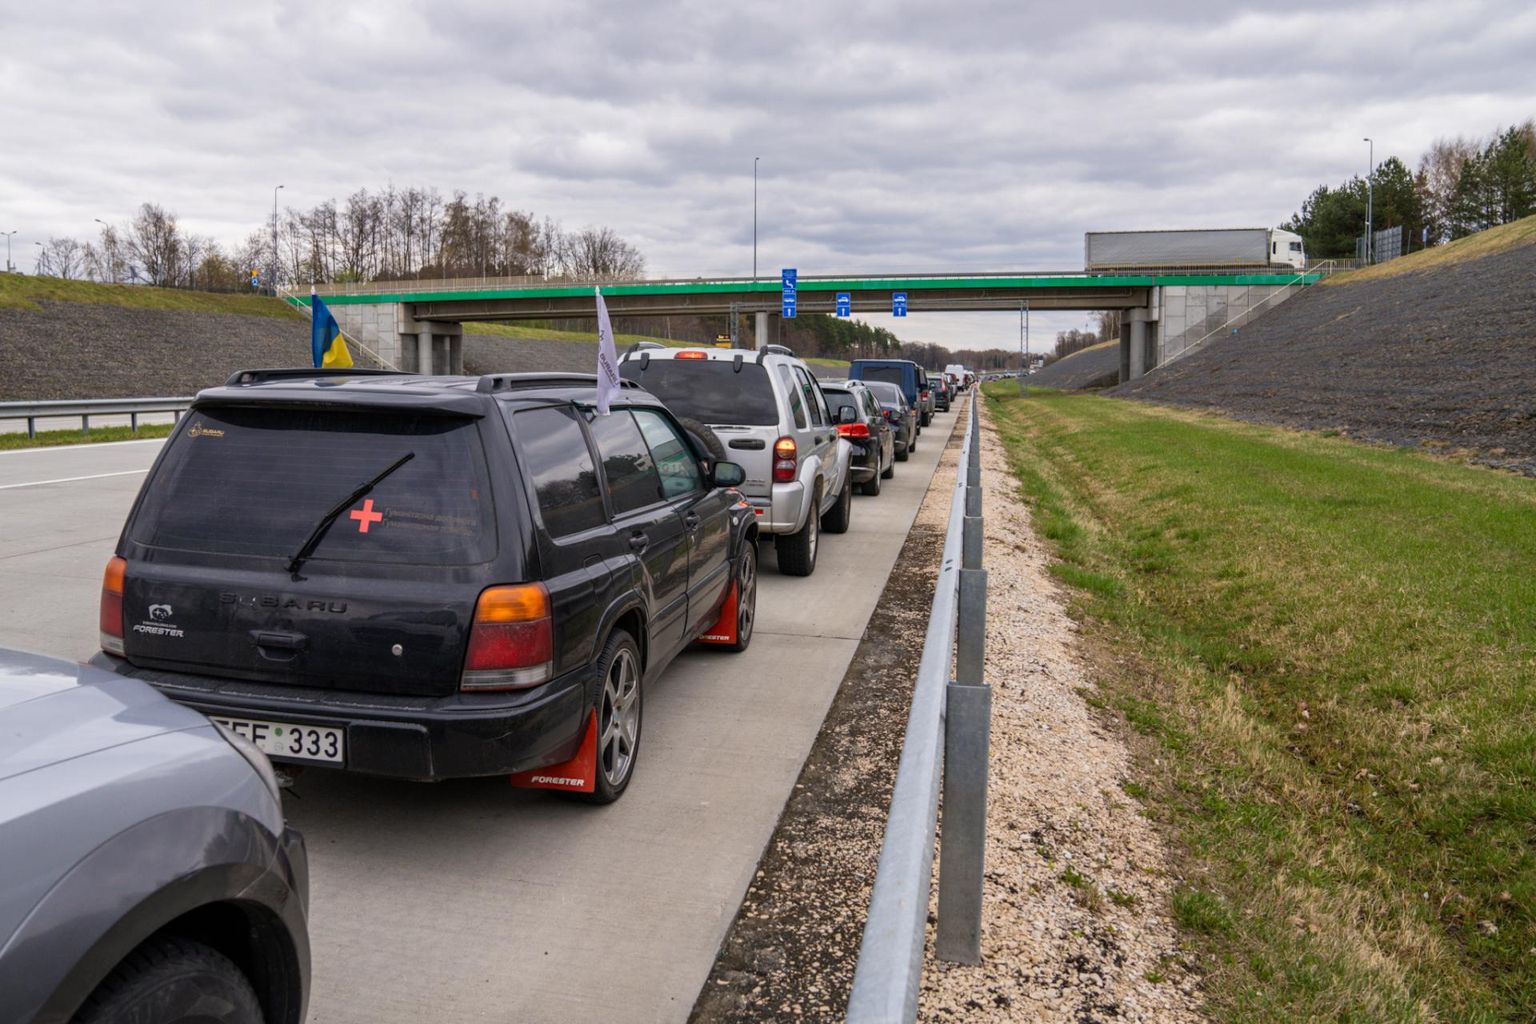 Korczowa grænseovergang i Polen til Ukraine.